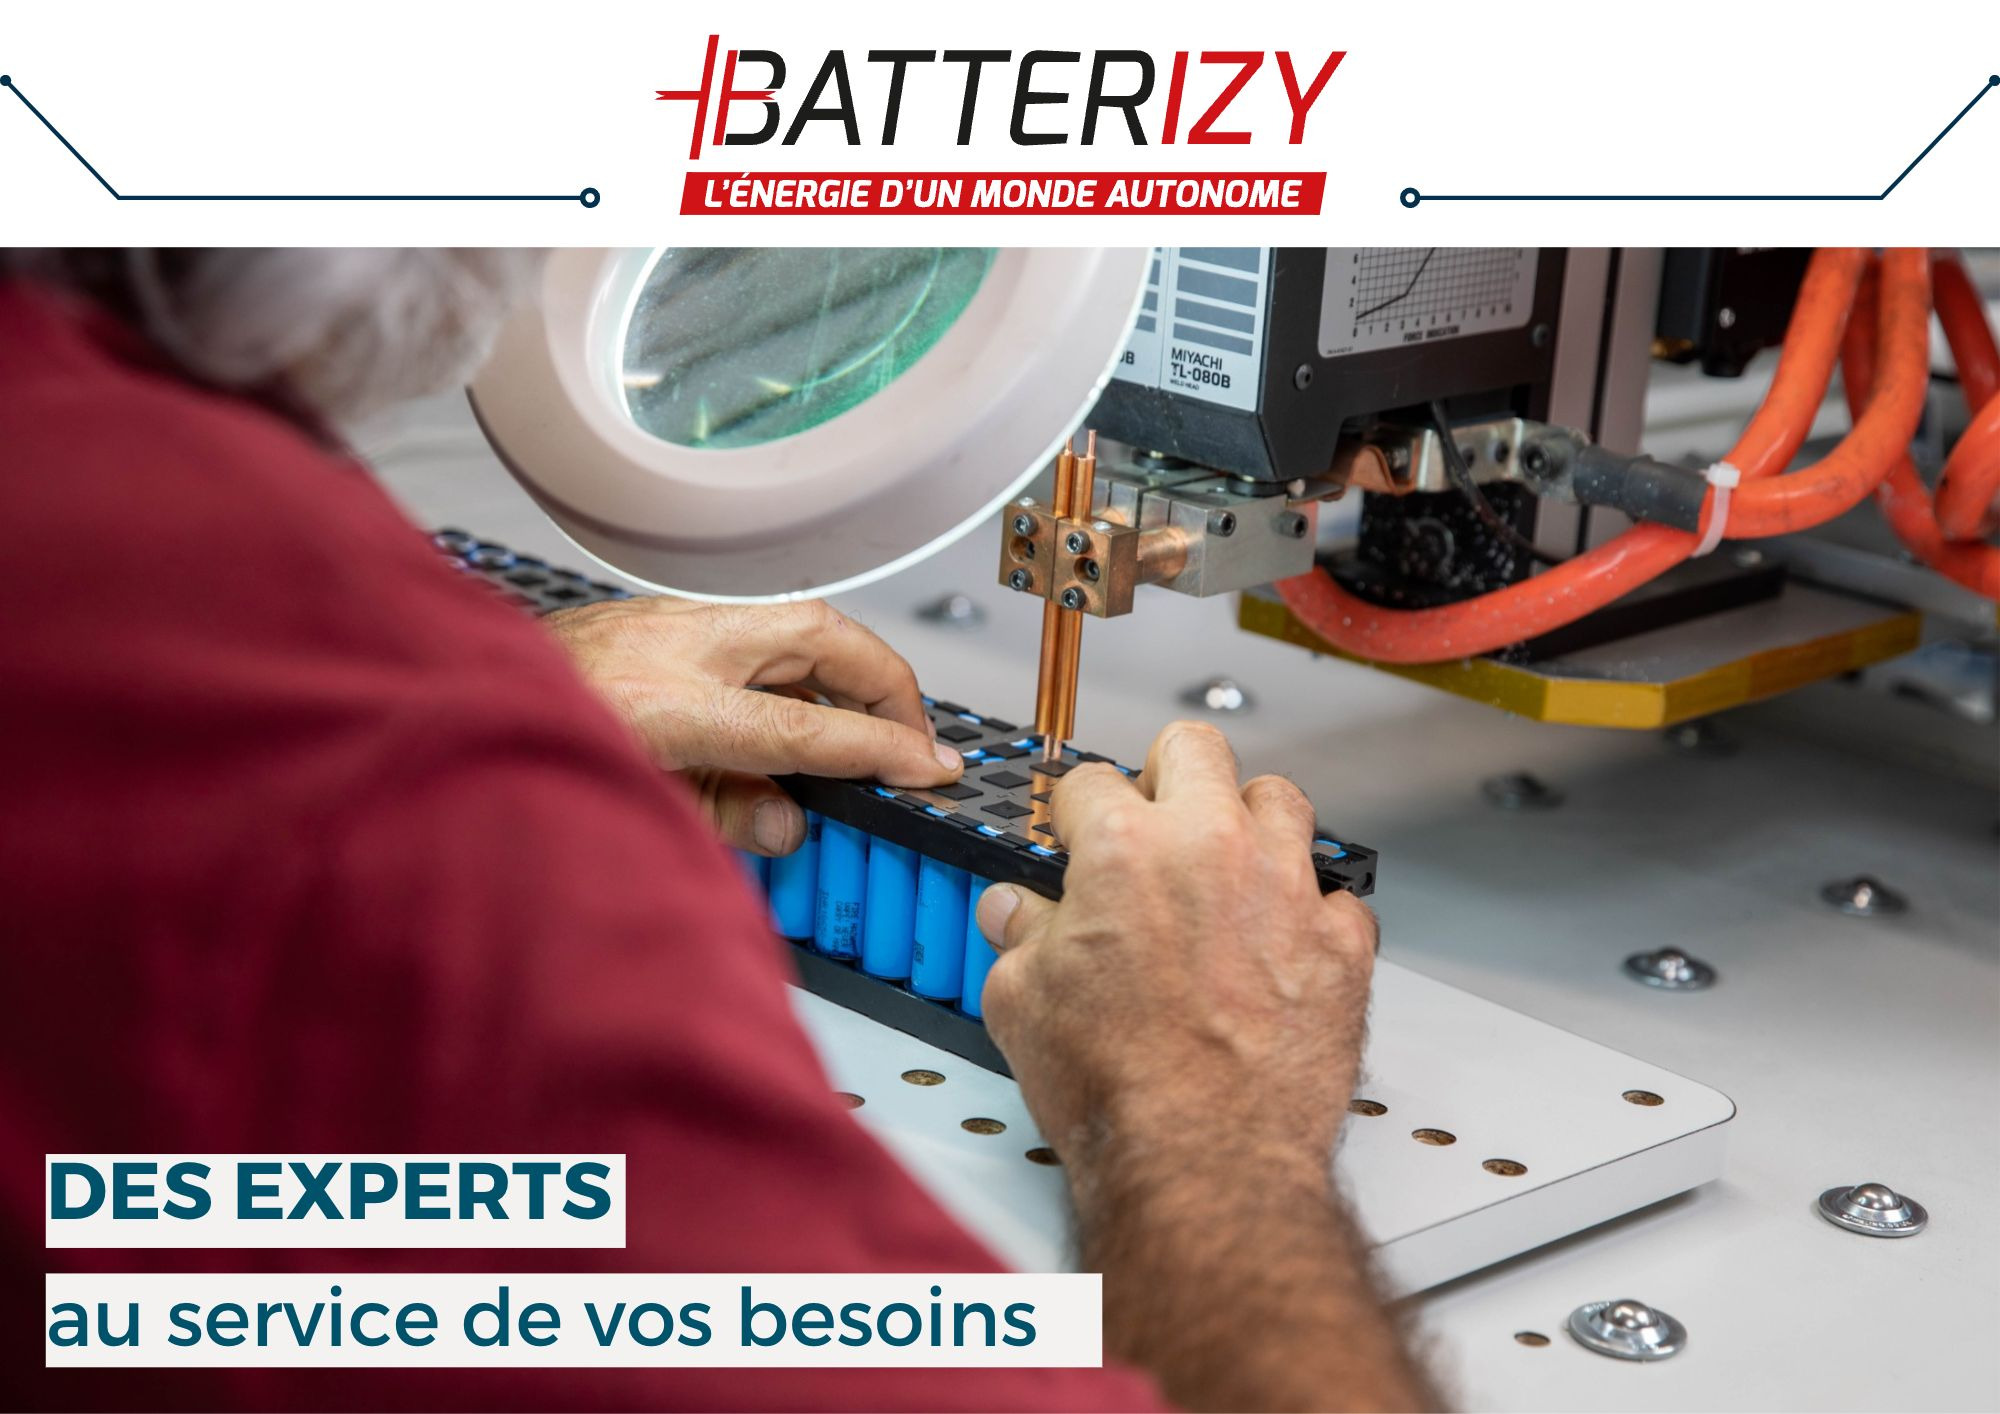 batterizy-experts-batteries-durables